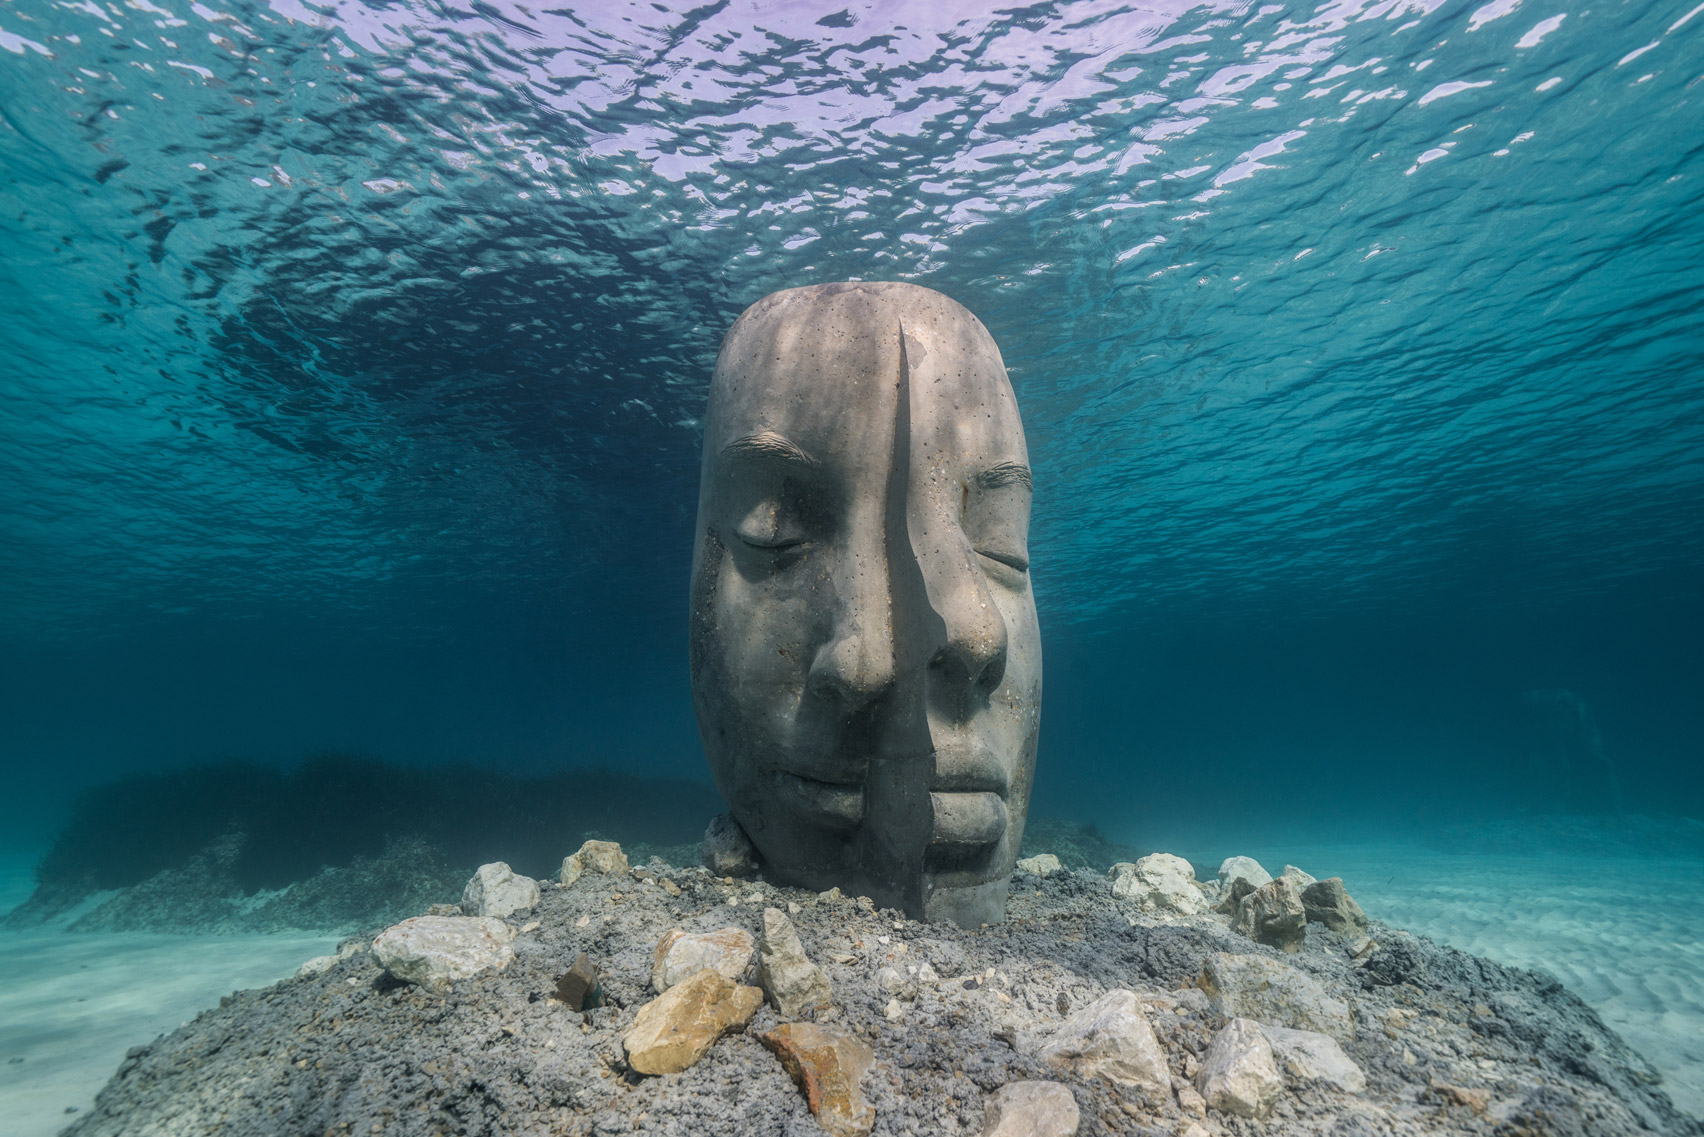 An underwater sculpture of a fragmented human face